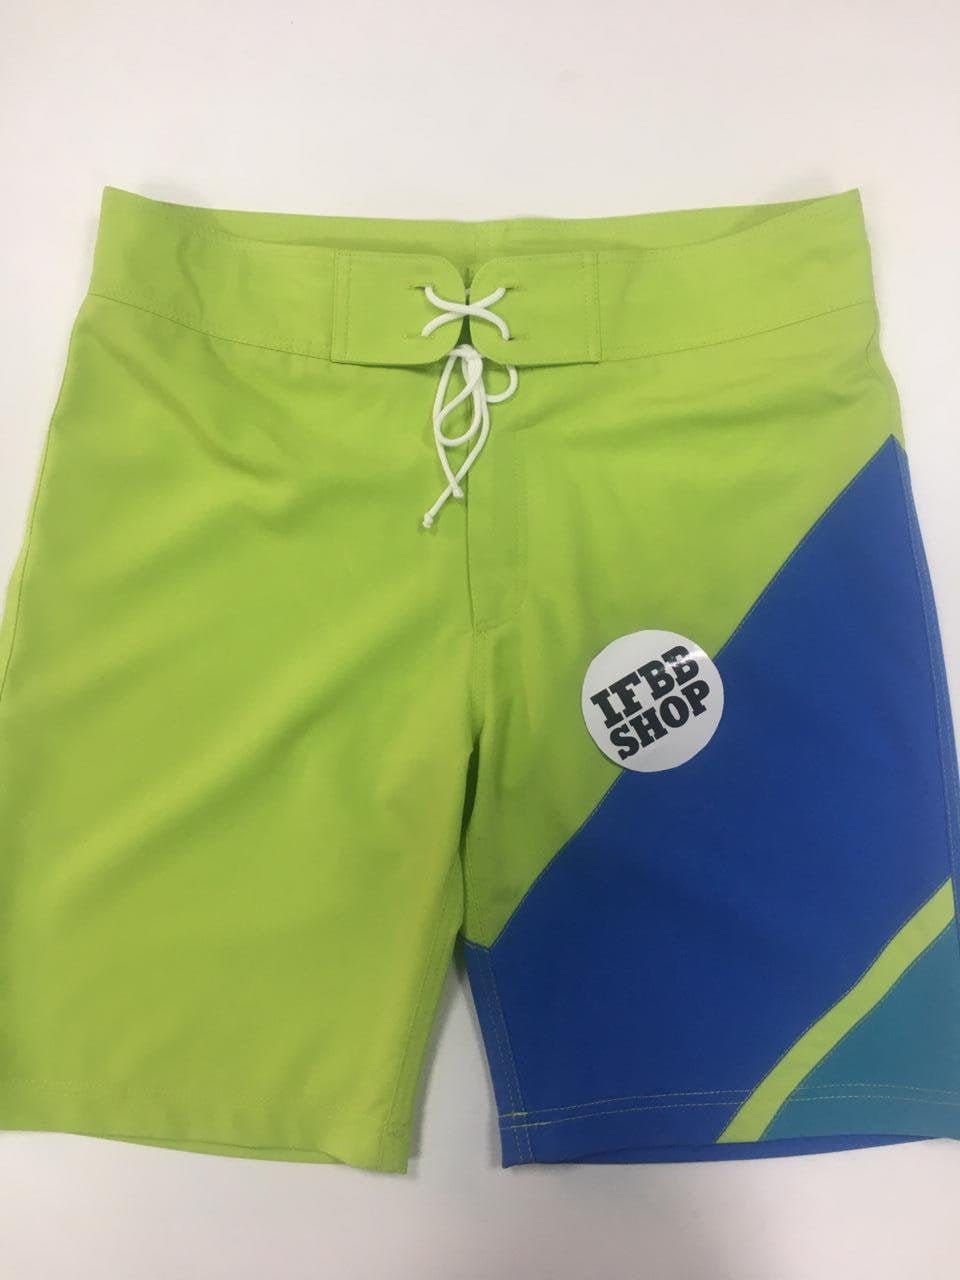 Custom made Board Shorts / Athletic BoardShorts | Etsy